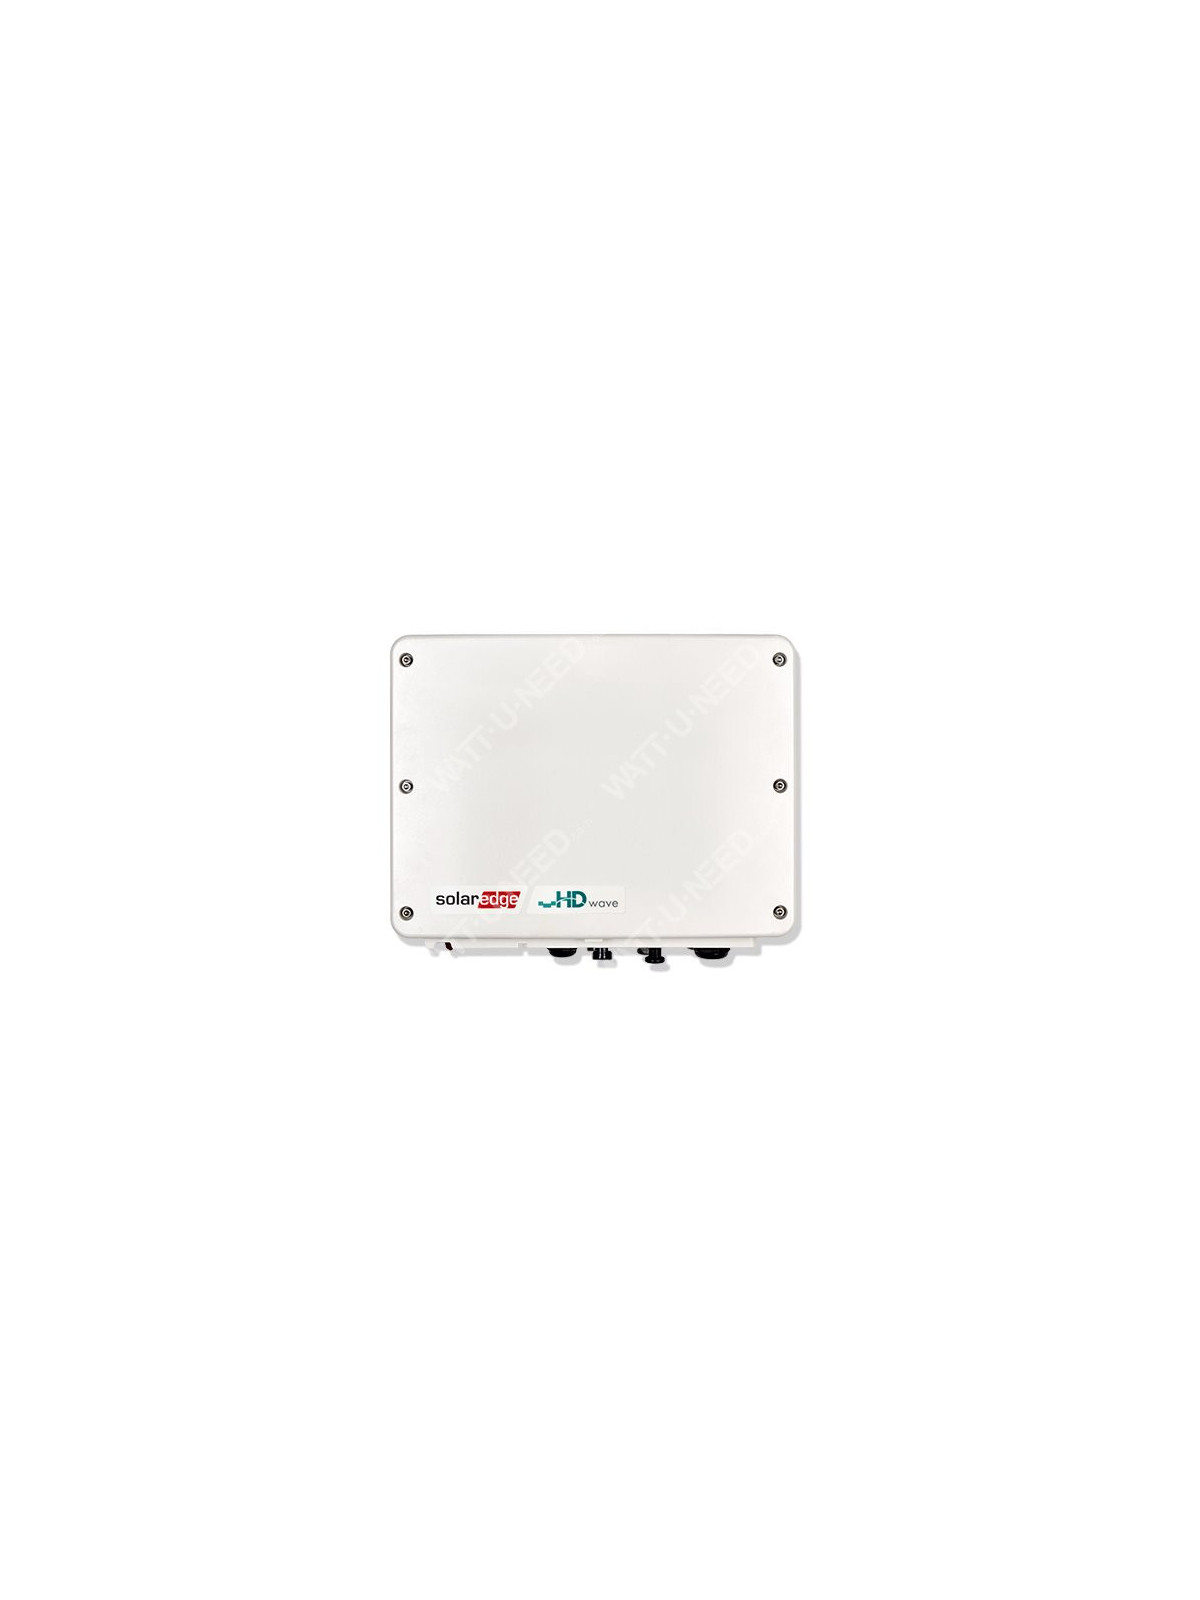 SolarEdge SE2200 to SE6000H HD Wave inverter